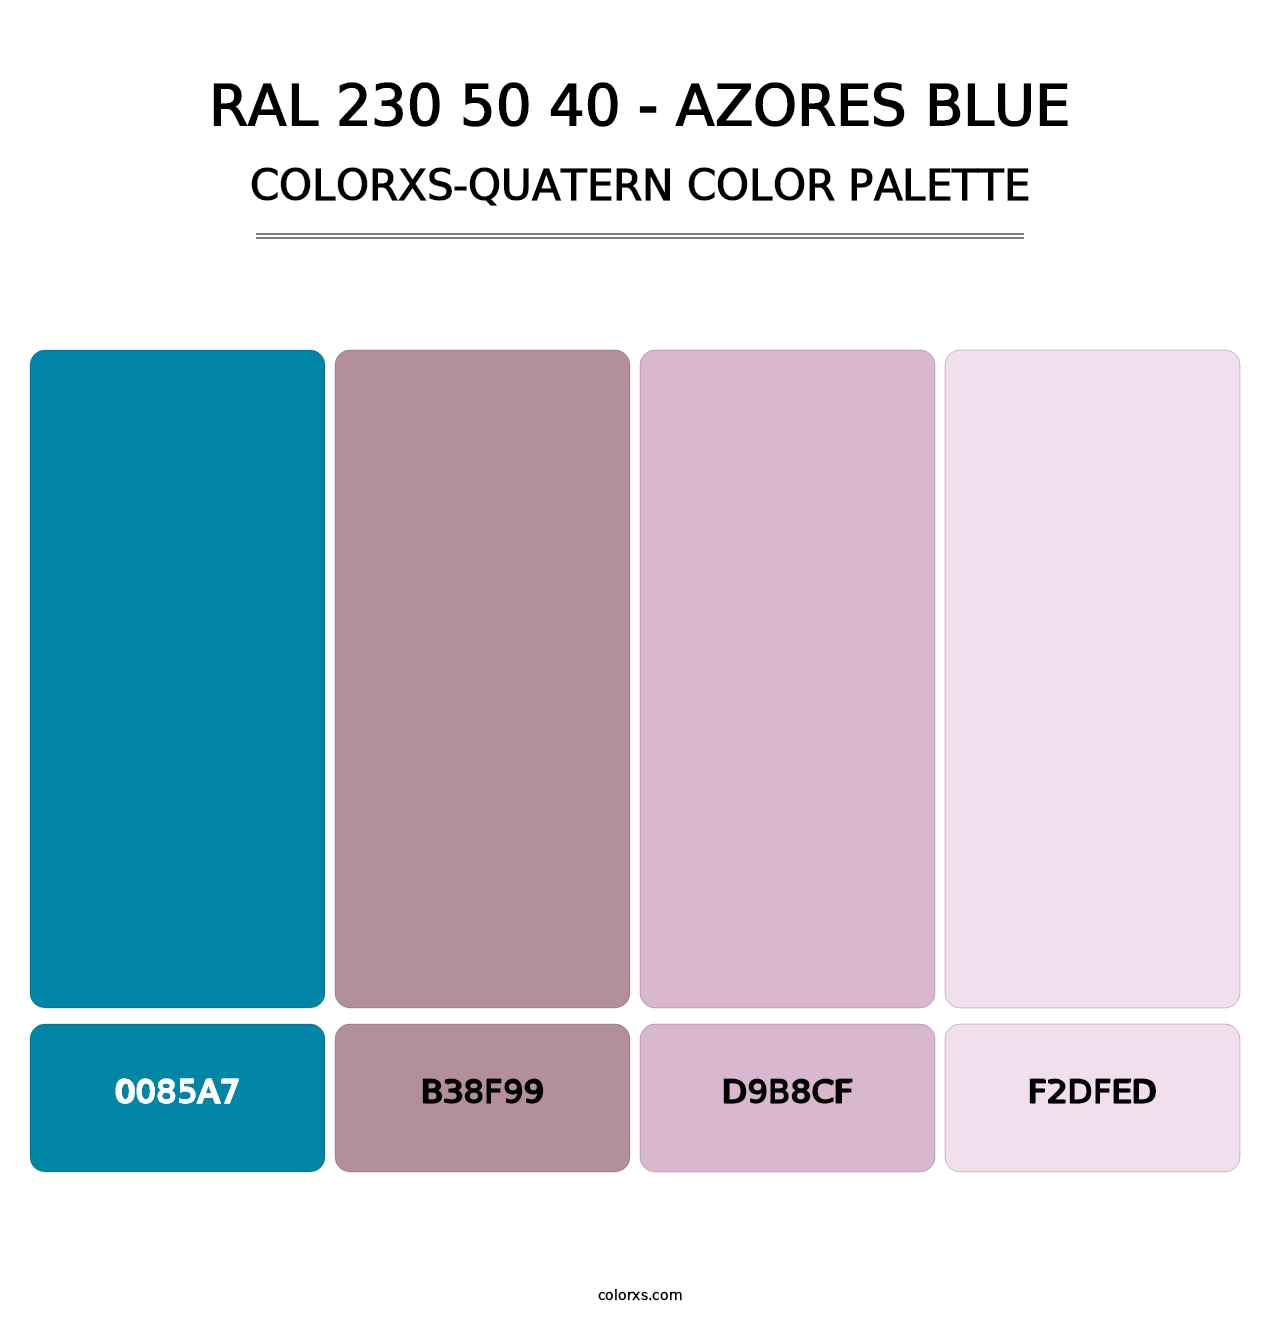 RAL 230 50 40 - Azores Blue - Colorxs Quatern Palette